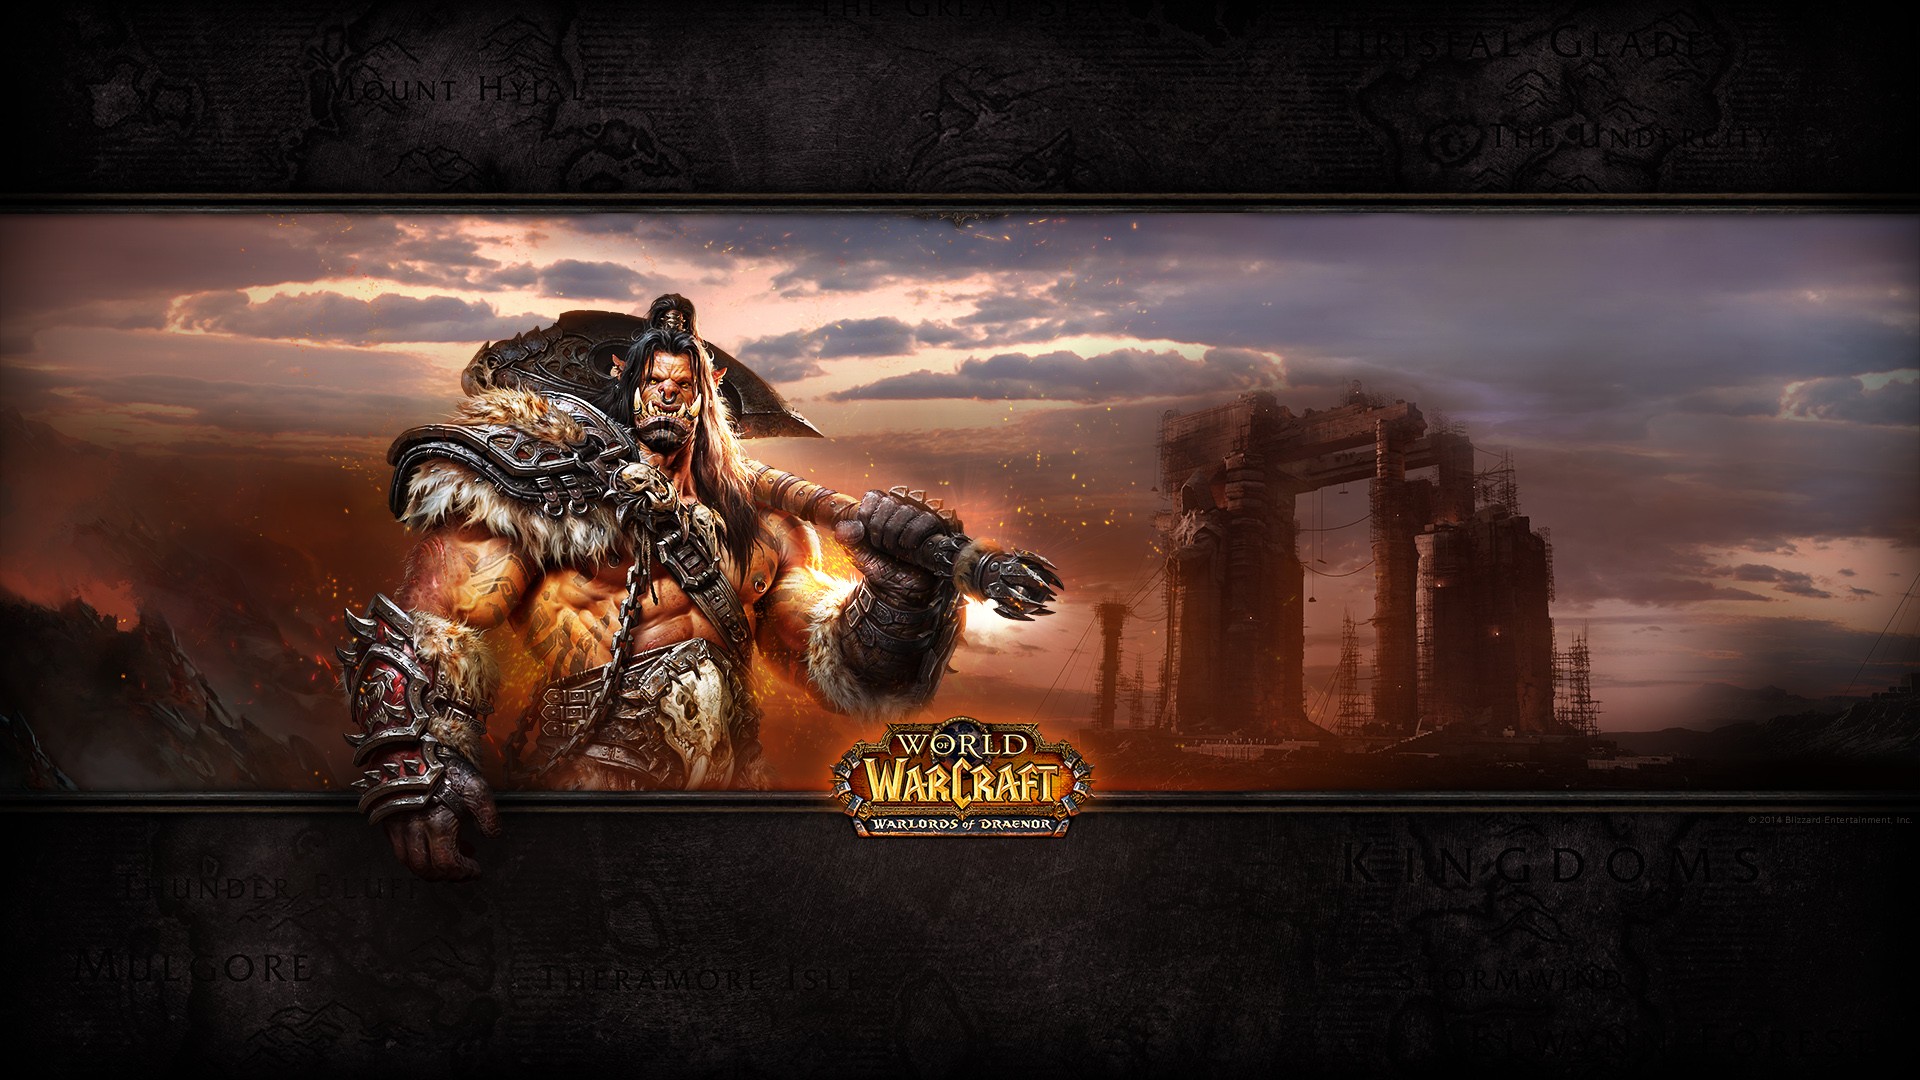 General 1920x1080 World of Warcraft World of Warcraft: Warlords of Draenor PC gaming Warlords of Draenor video game art